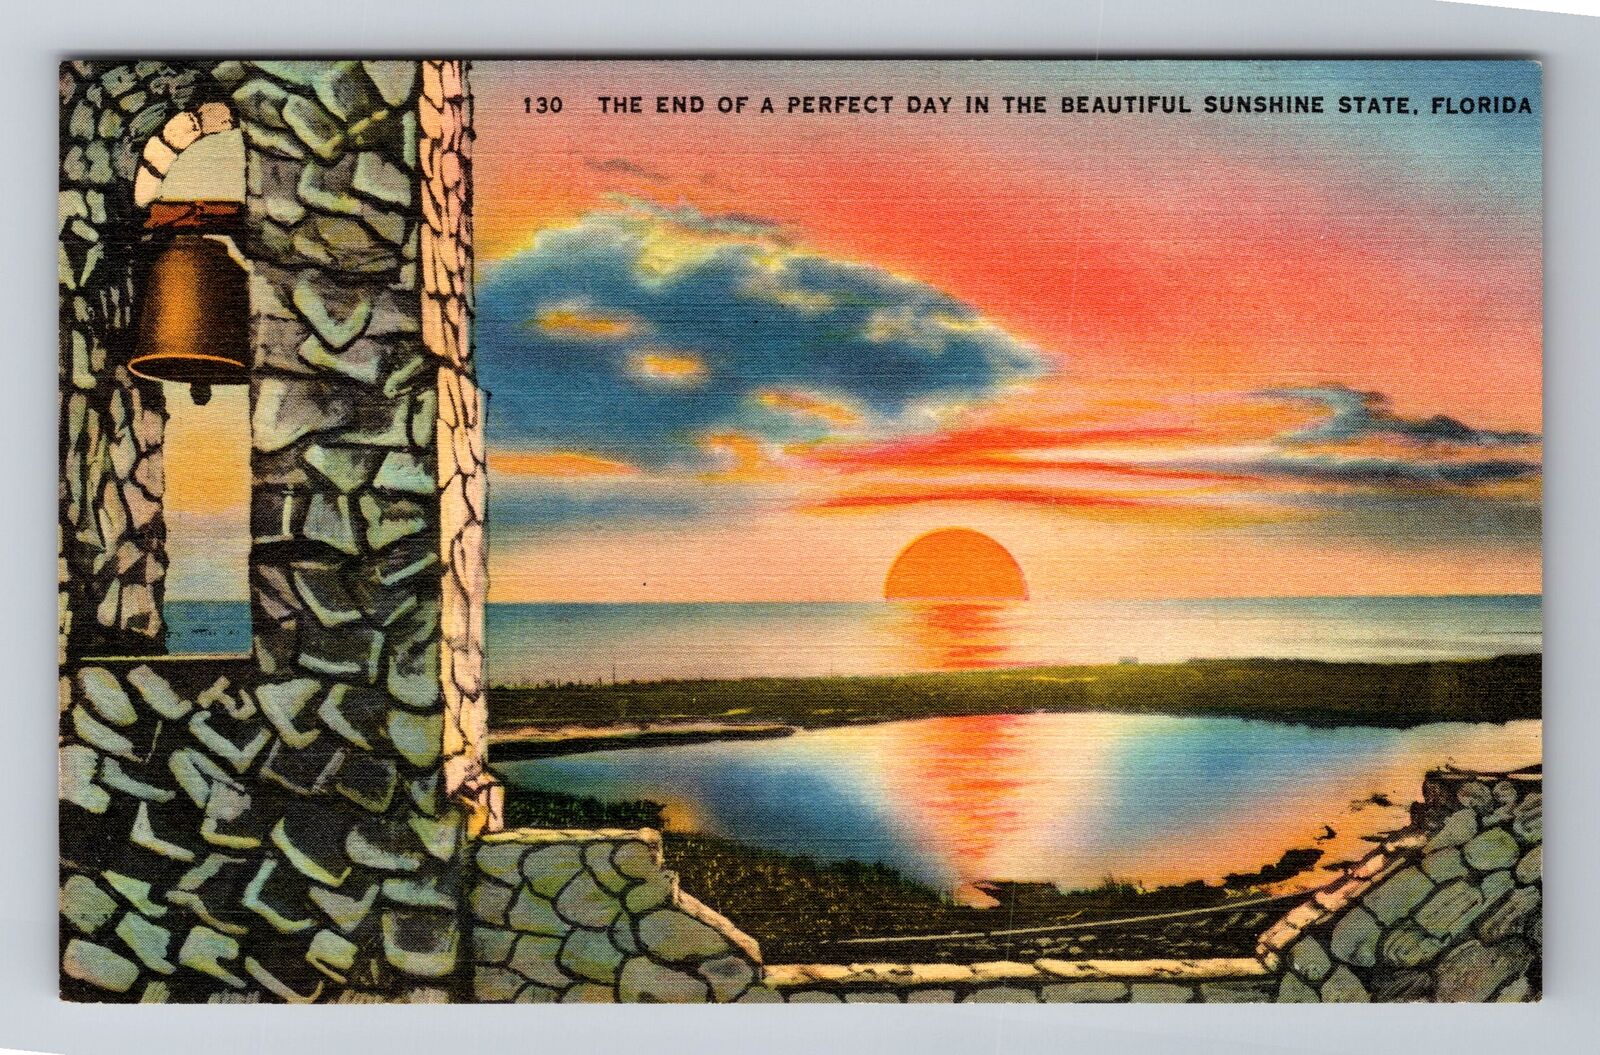 FL-Florida, Sunset over Ocean, General Greetings, Vintage Souvenir Postcard